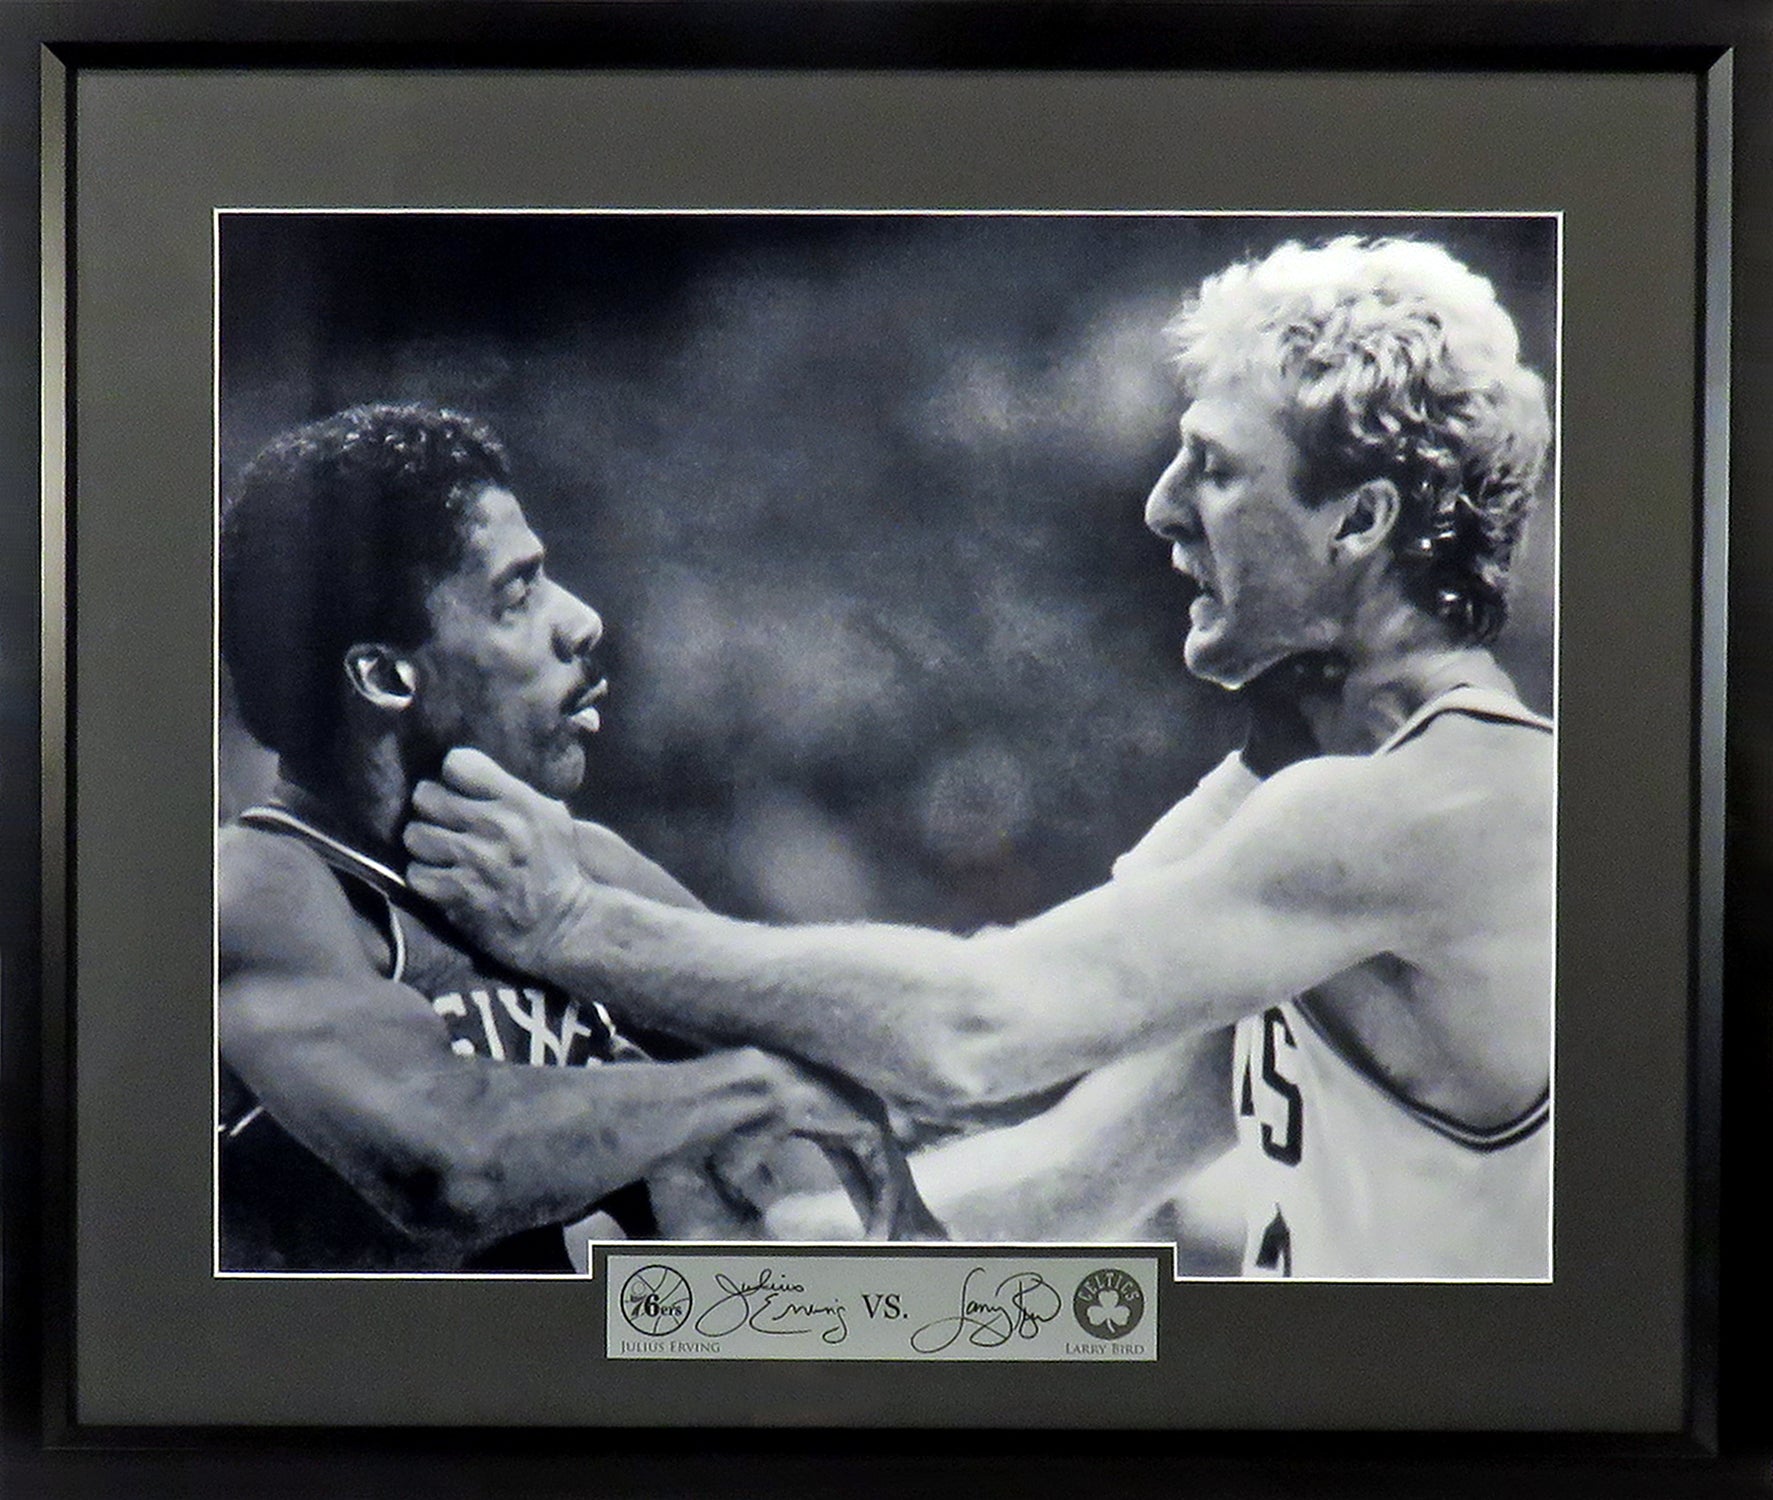 Larry Bird Boston Celtics Unsigned vs. Magic Johnson Photograph